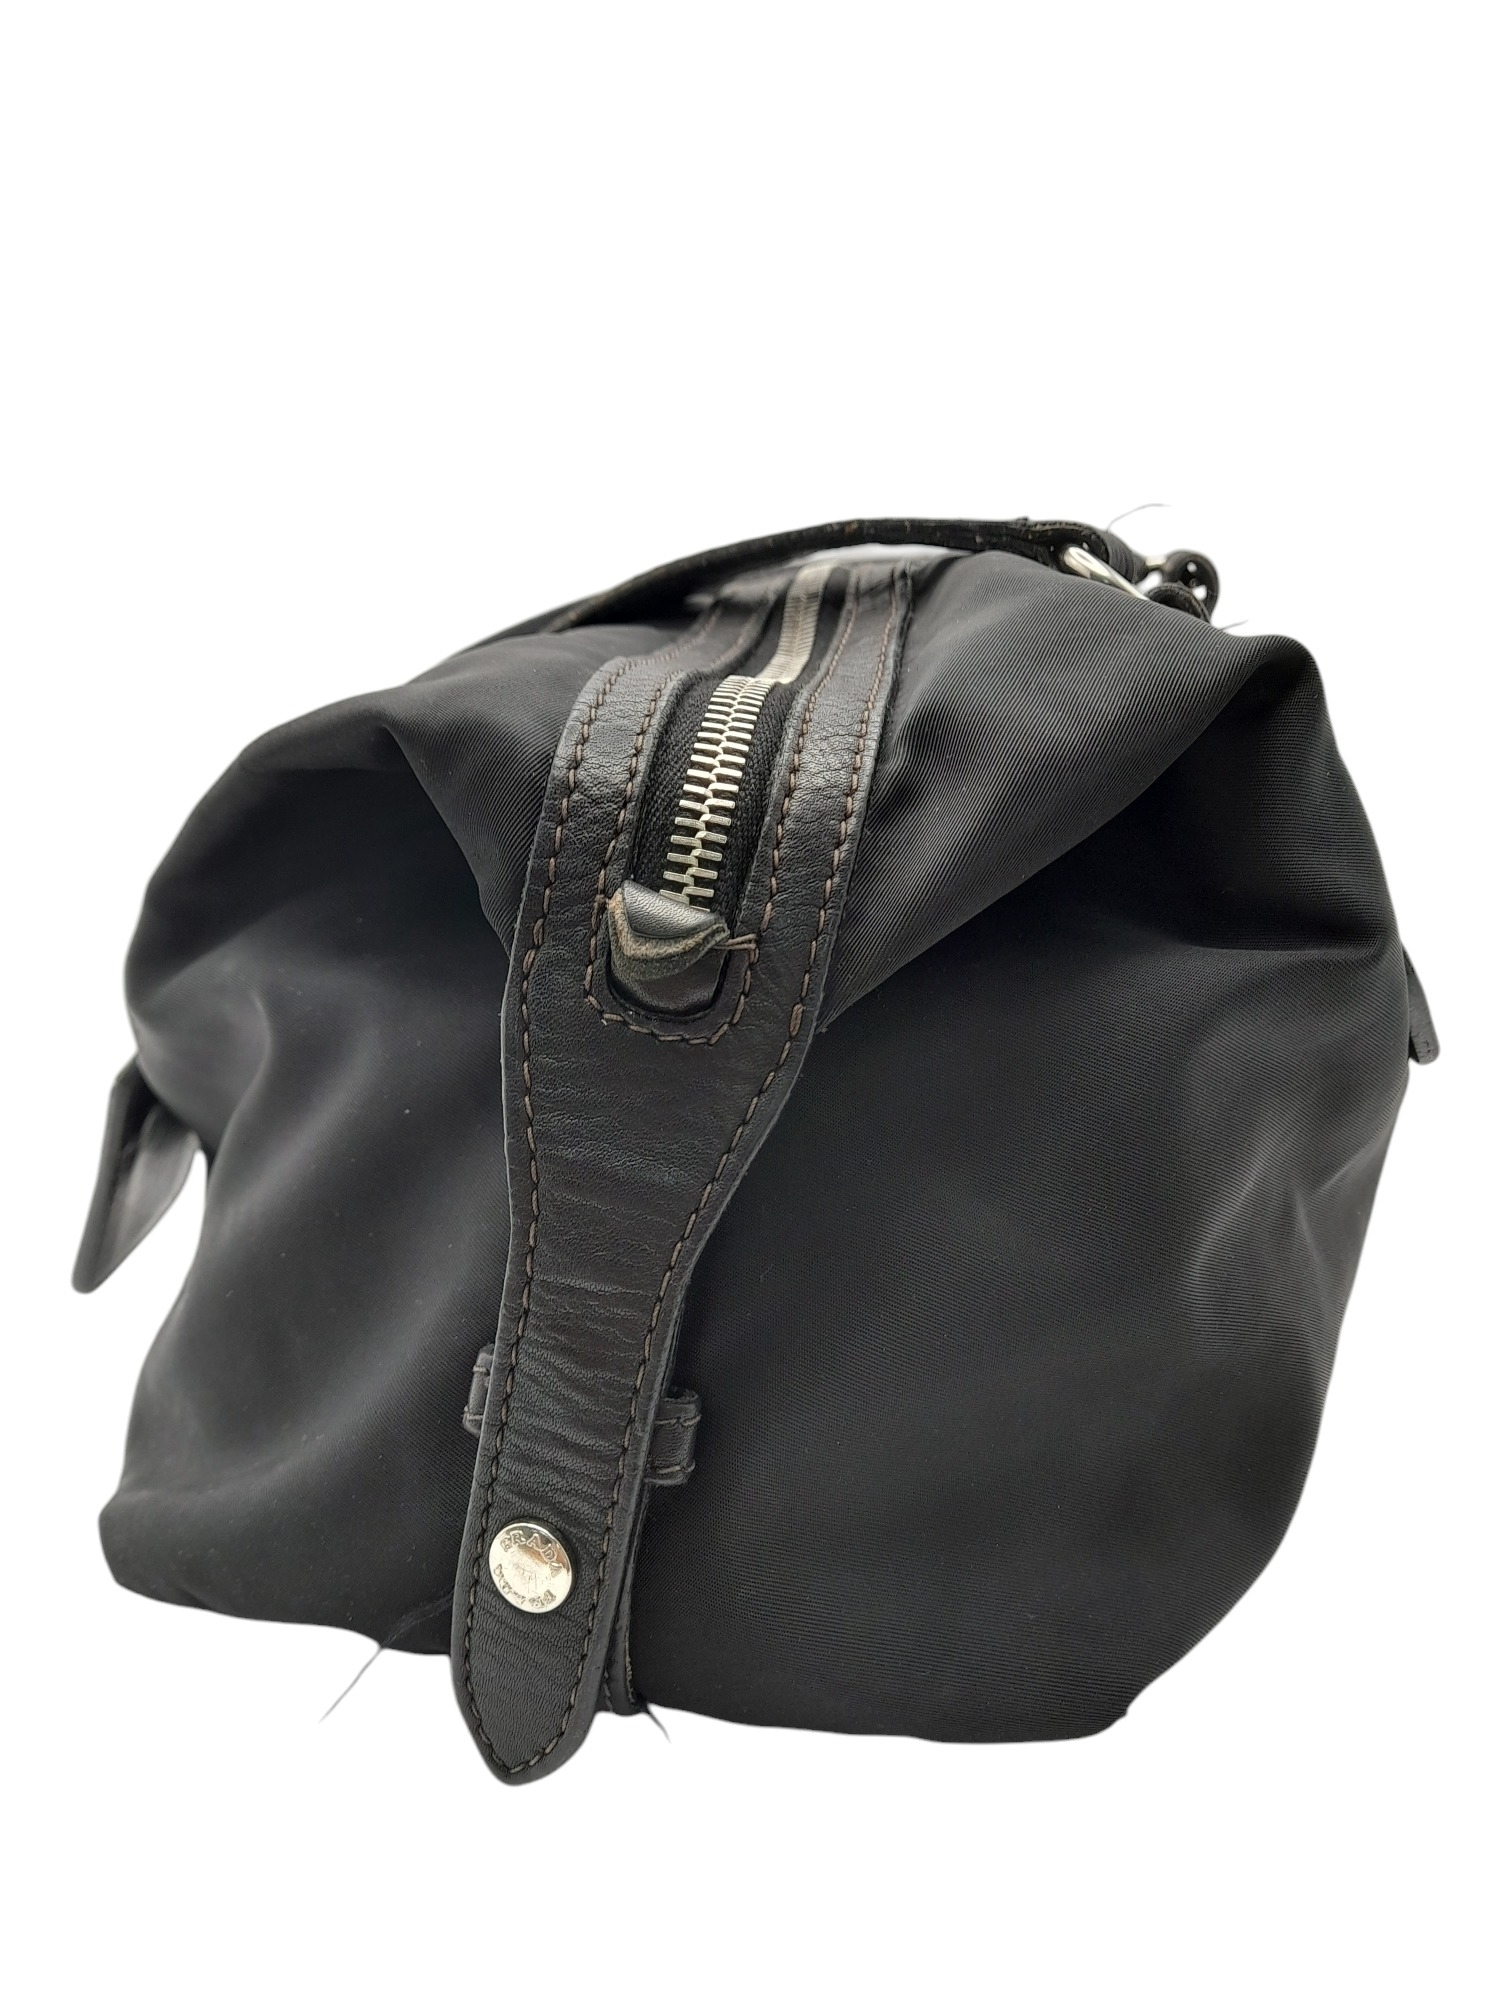 A Prada Black Tessuto Satchel. Textile exterior with leather trim, silver-tone hardware, a top zip - Image 6 of 7